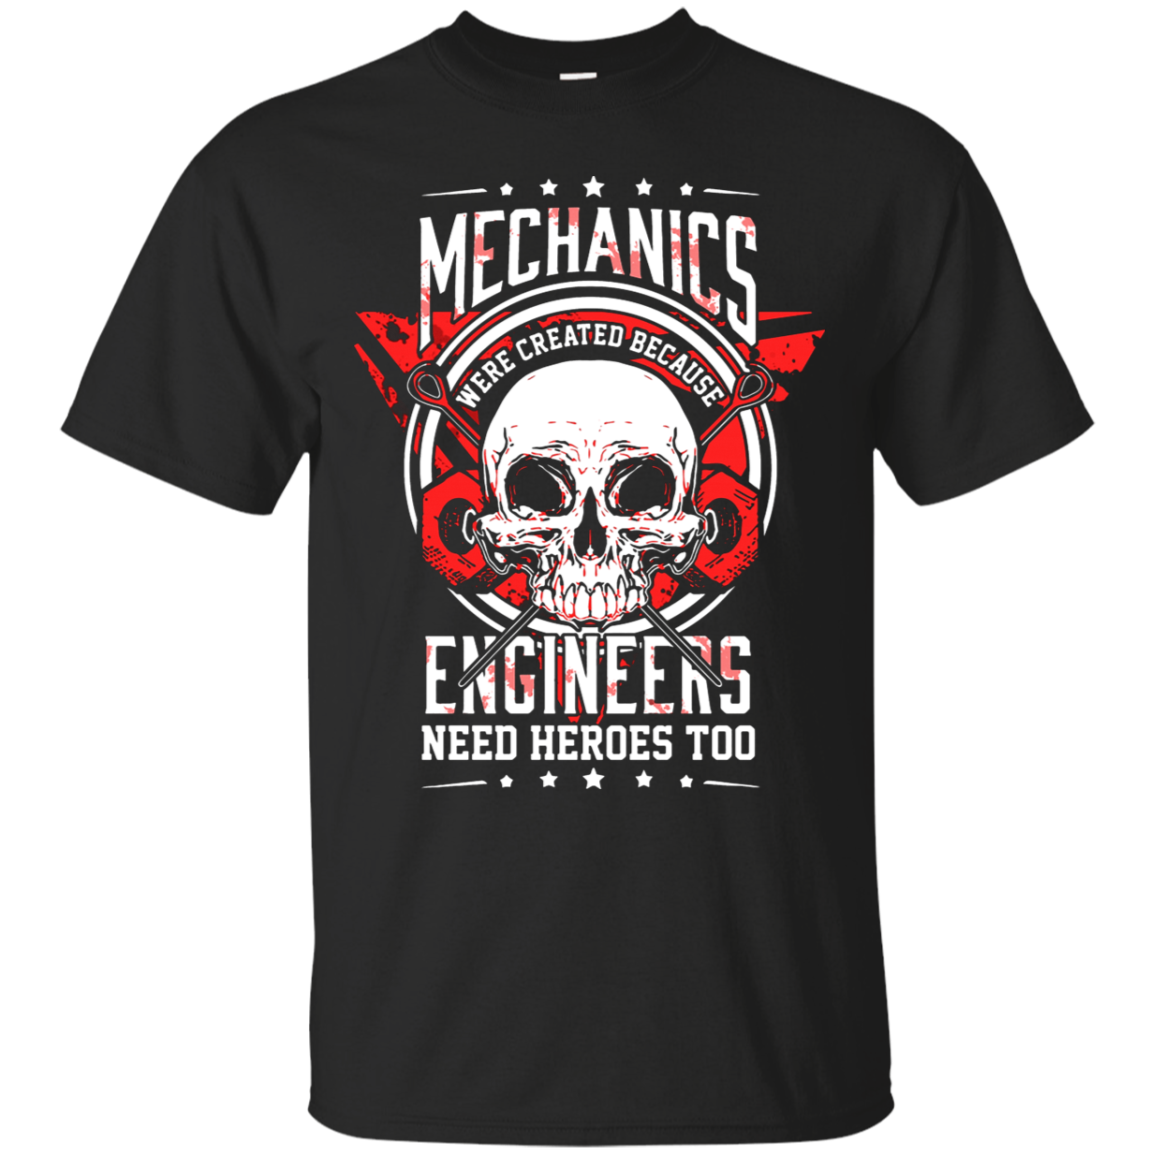 Mechanics Were Created Because Engineers Need Heroes Too T-shirt